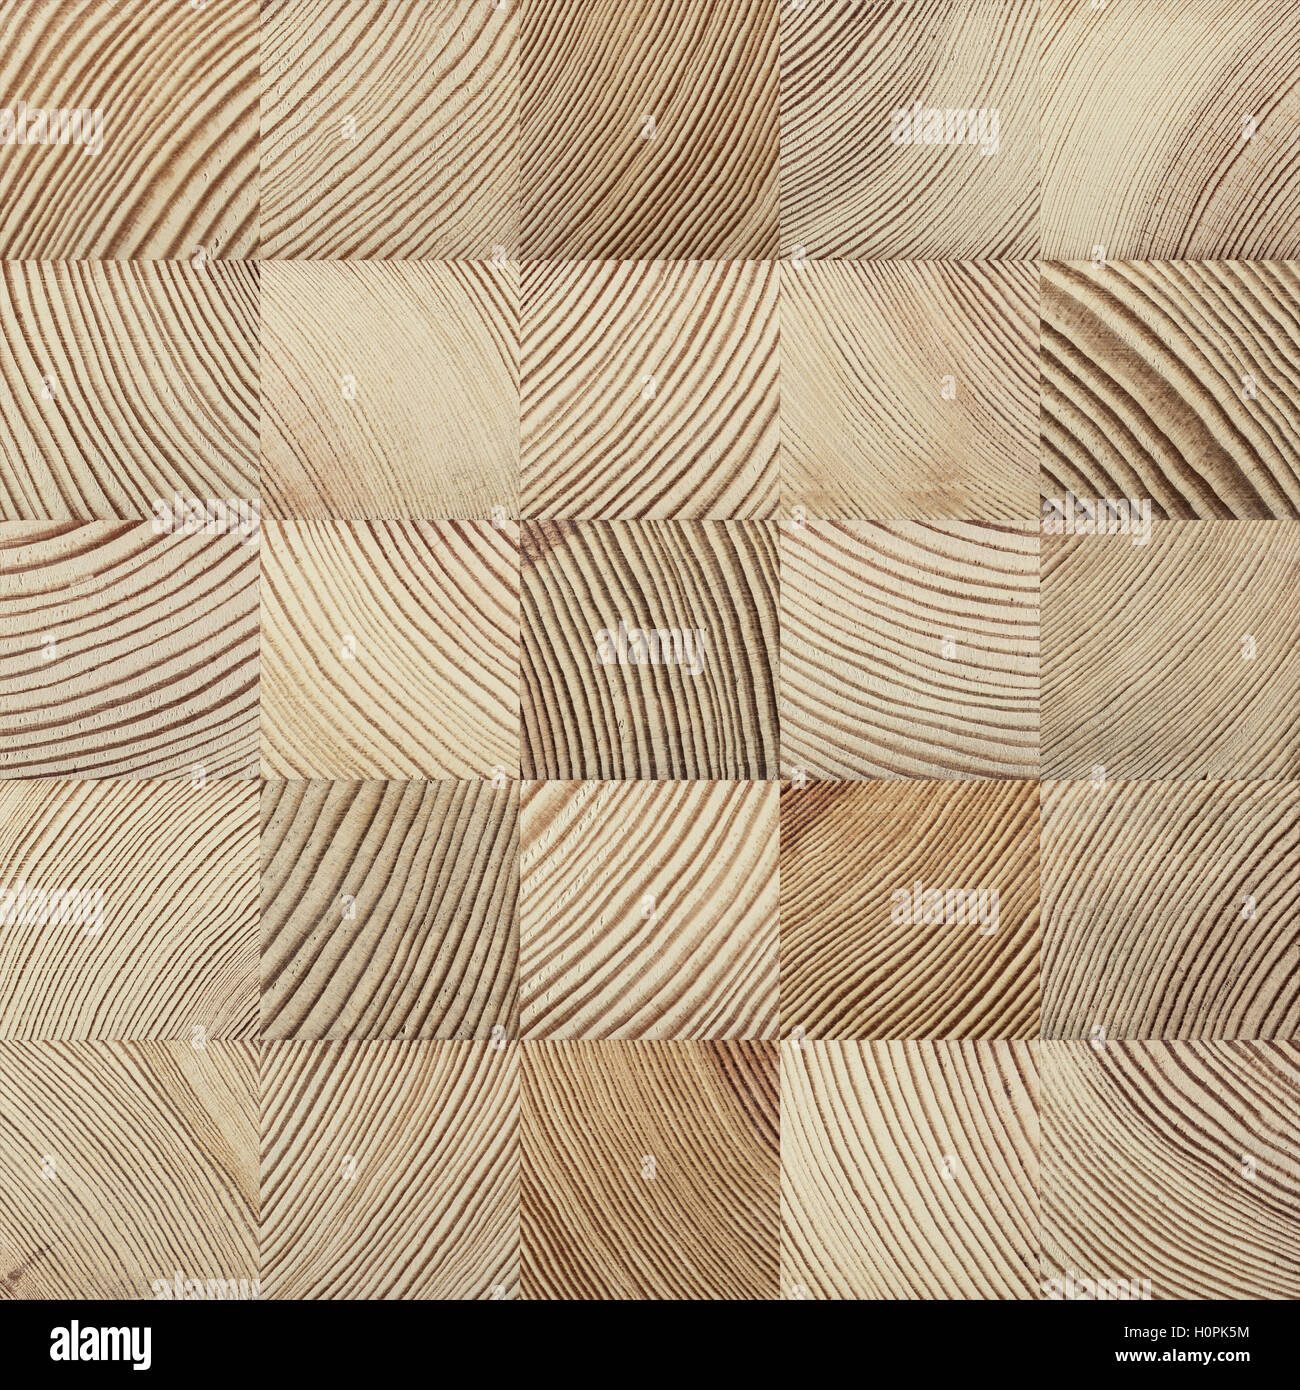 Seamless end grain wood texture. Cross cut lumber blocks. Stock Photo